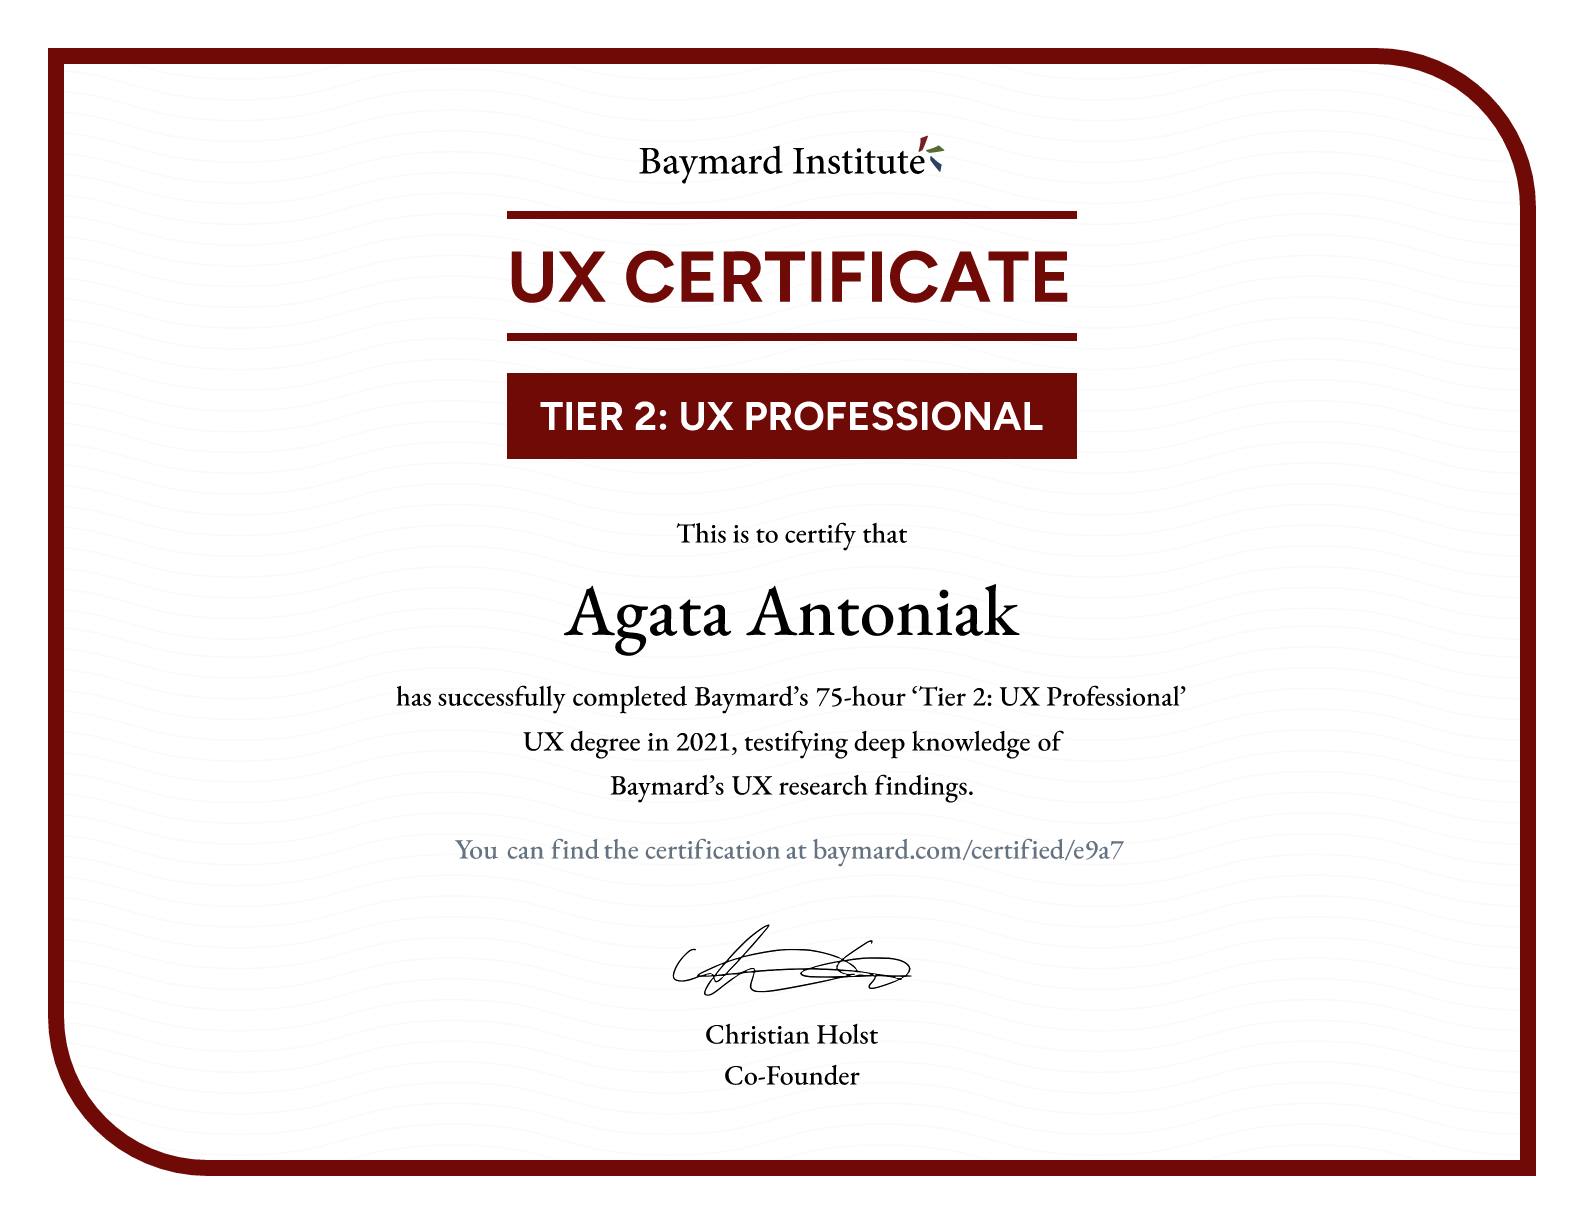 Agata Antoniak’s certificate